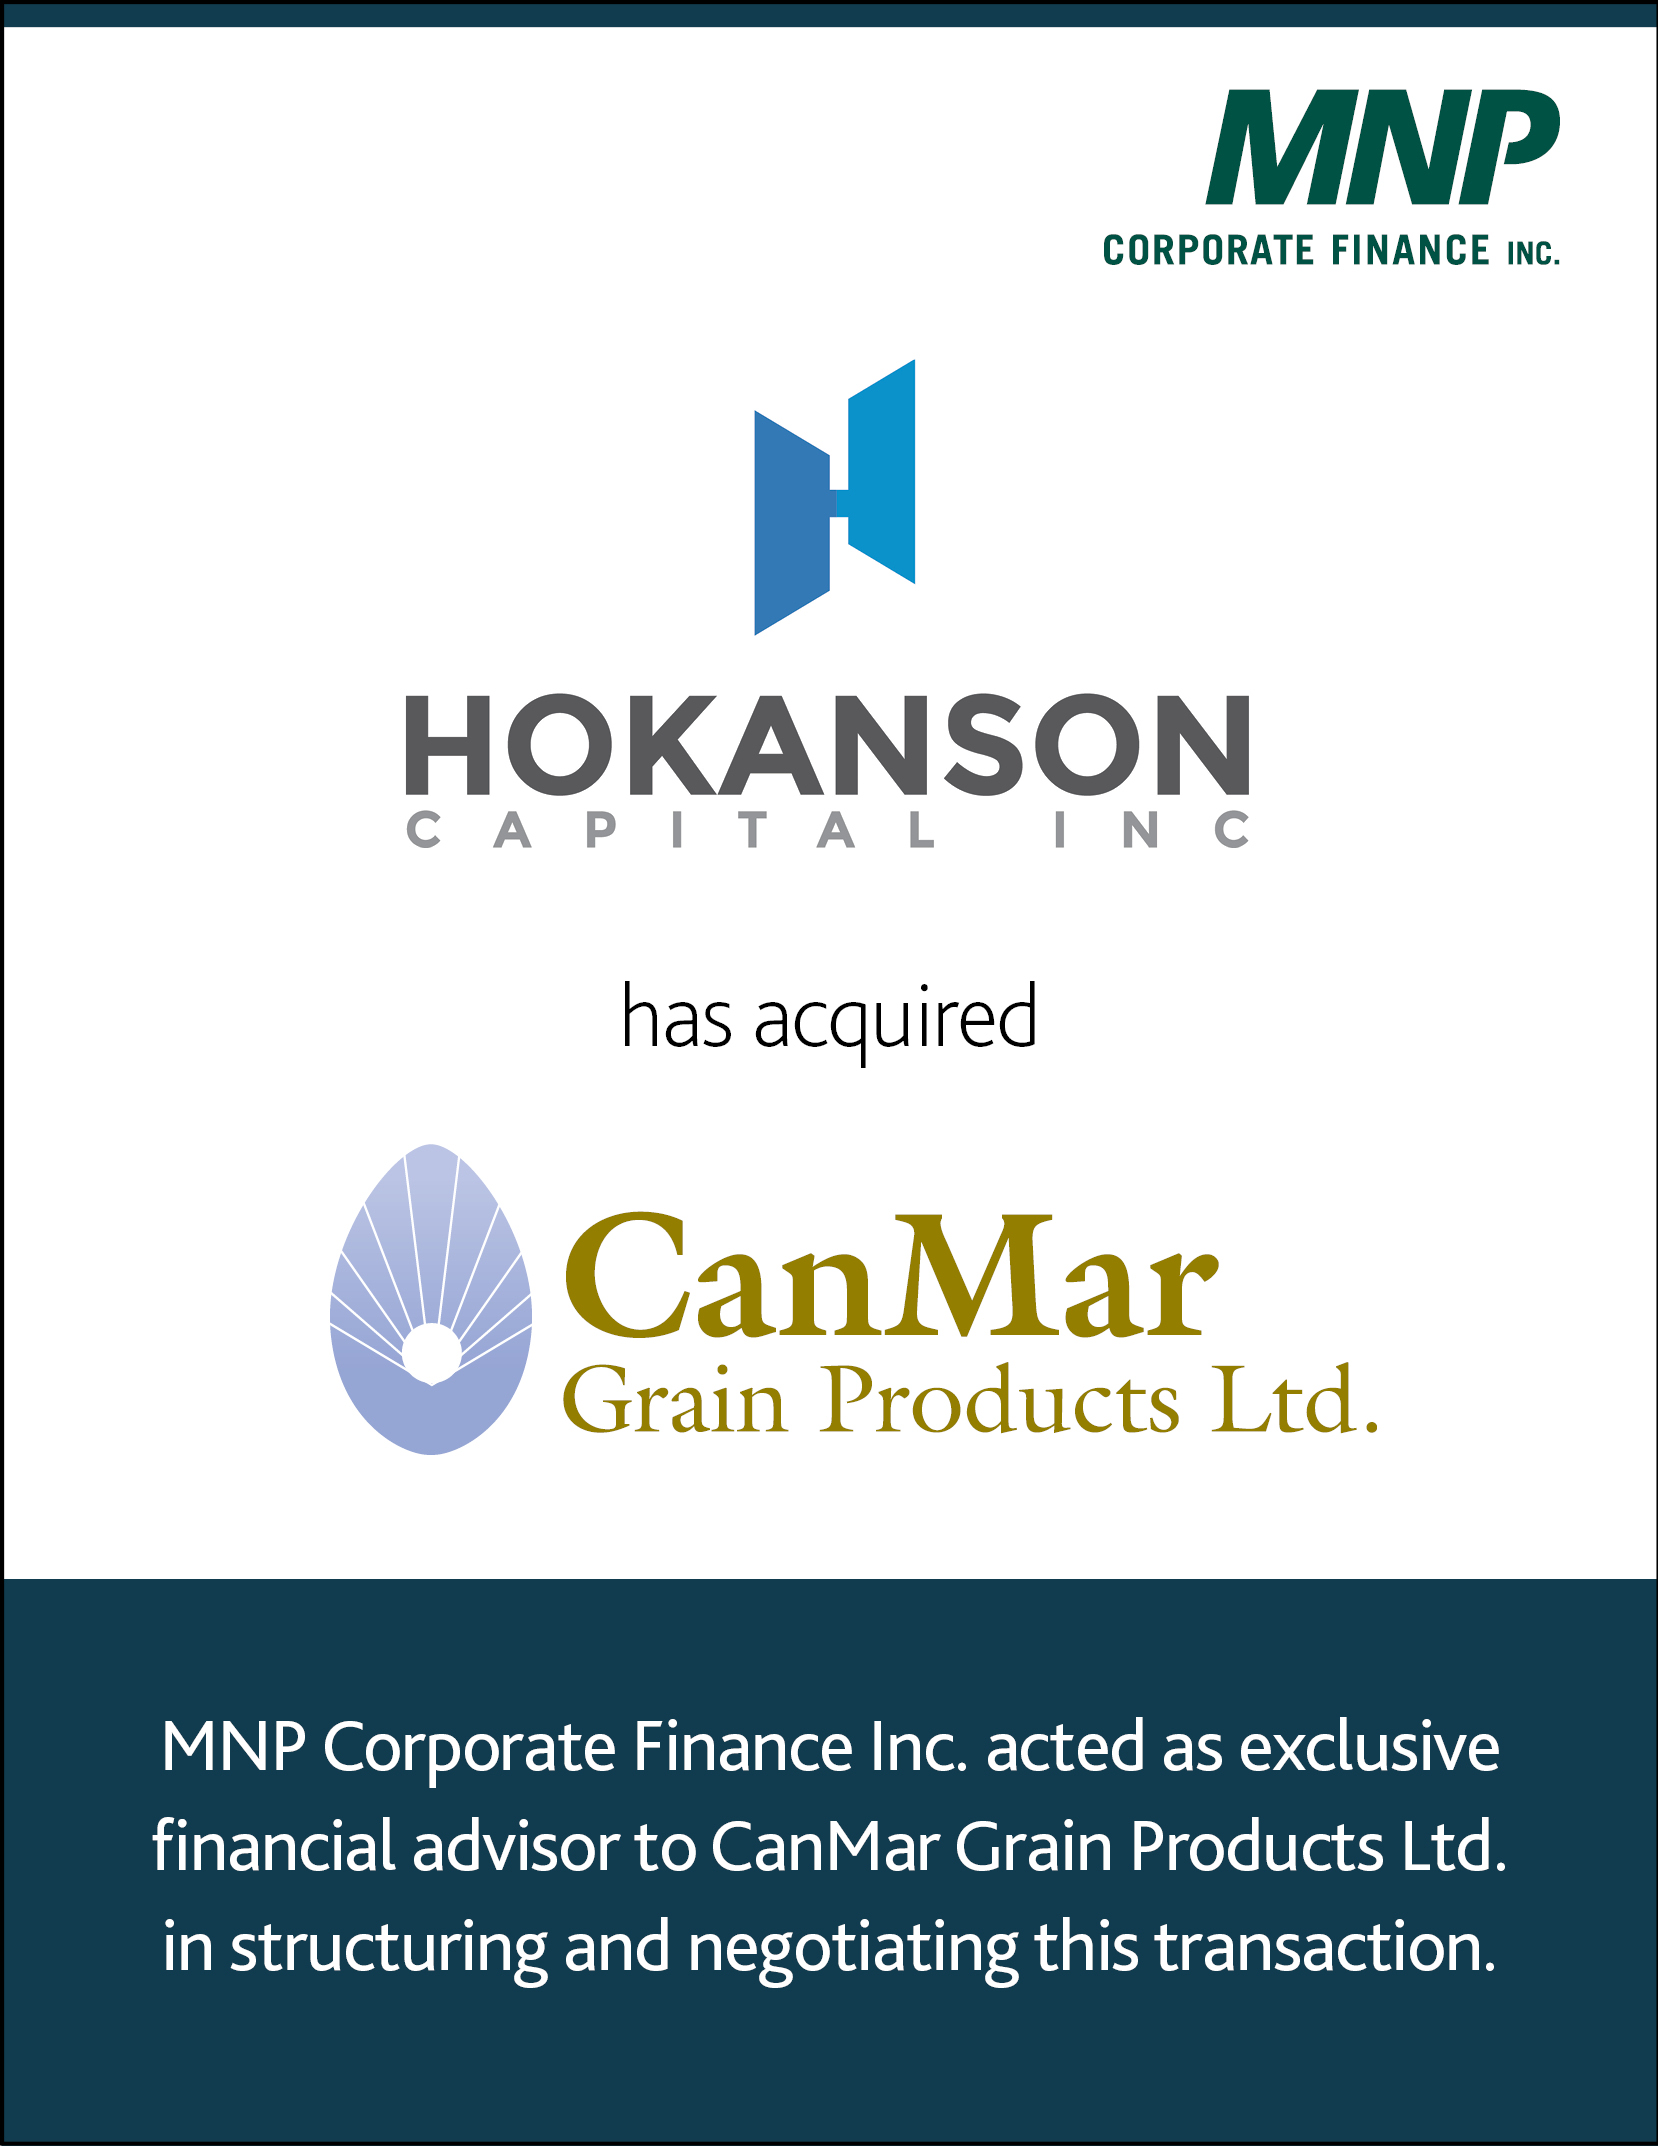 Hokanson Capital Inc. has acquired CanMar Grain Products Ltd.